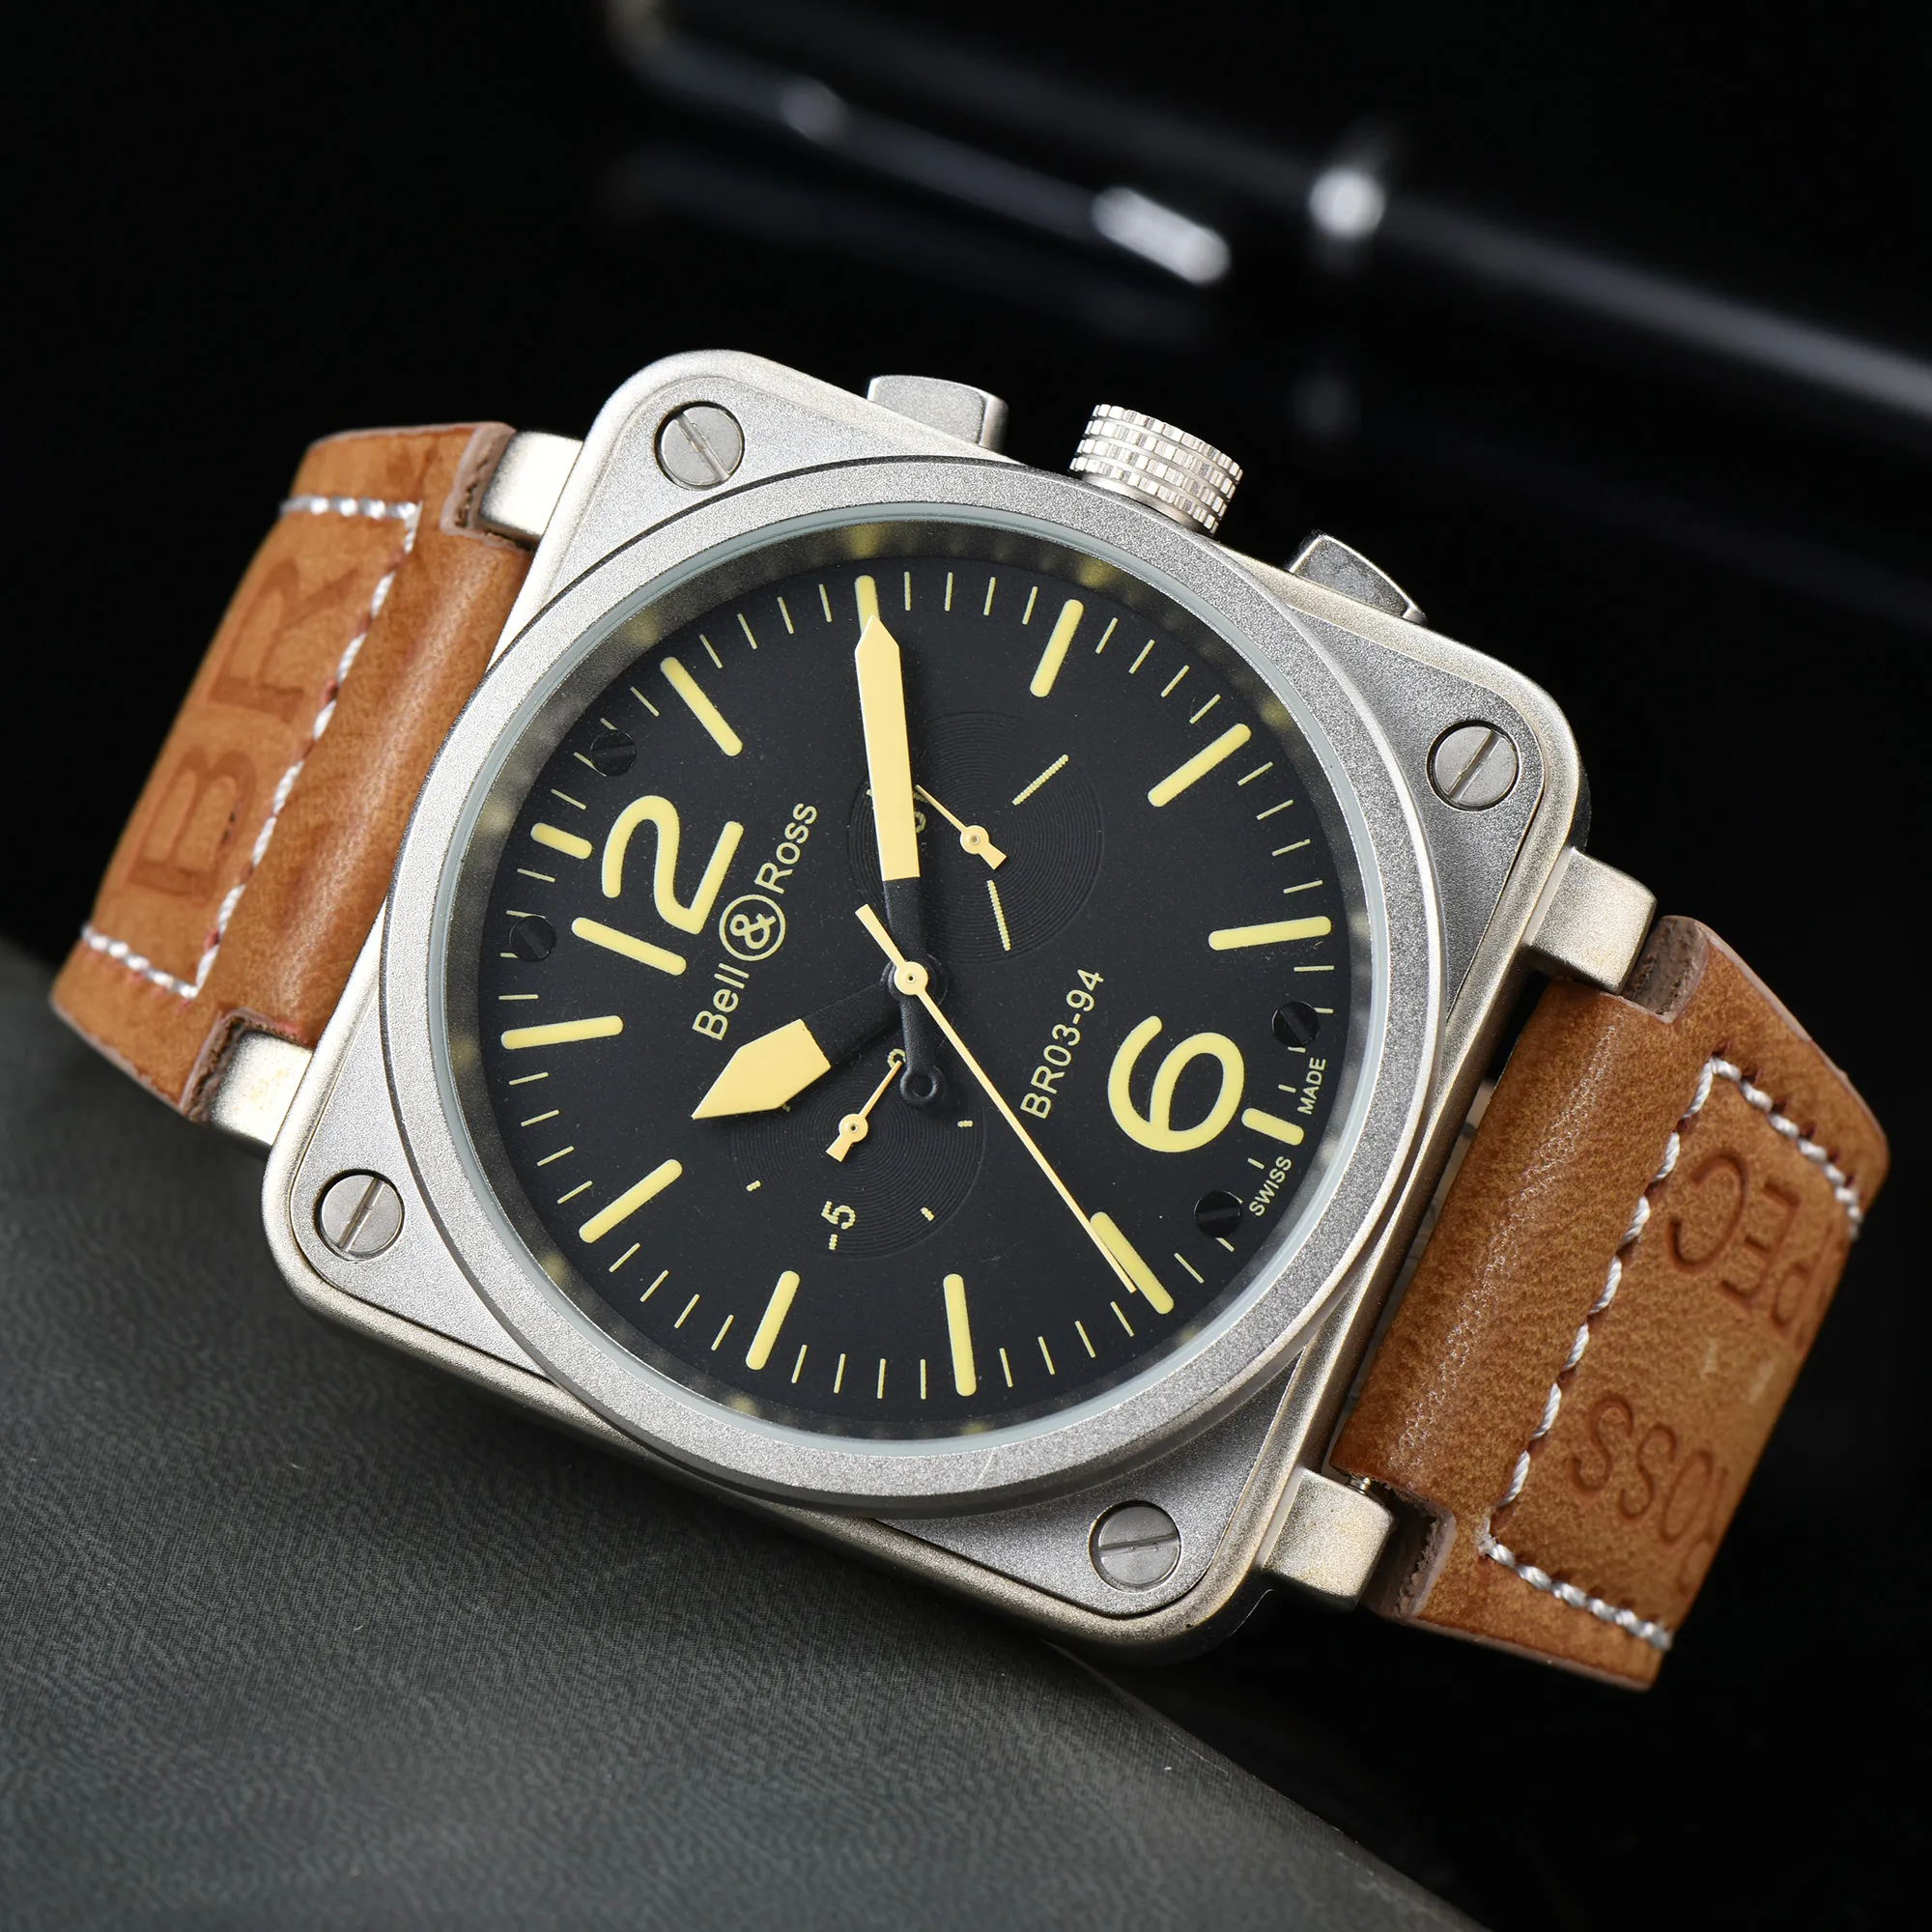 2023 Beller Neue Herren-Armbanduhren, automatische mechanische Uhr, Glocke, braunes Leder, schwarze Ross-Gummi-Armbanduhren, Geschenk #723BR